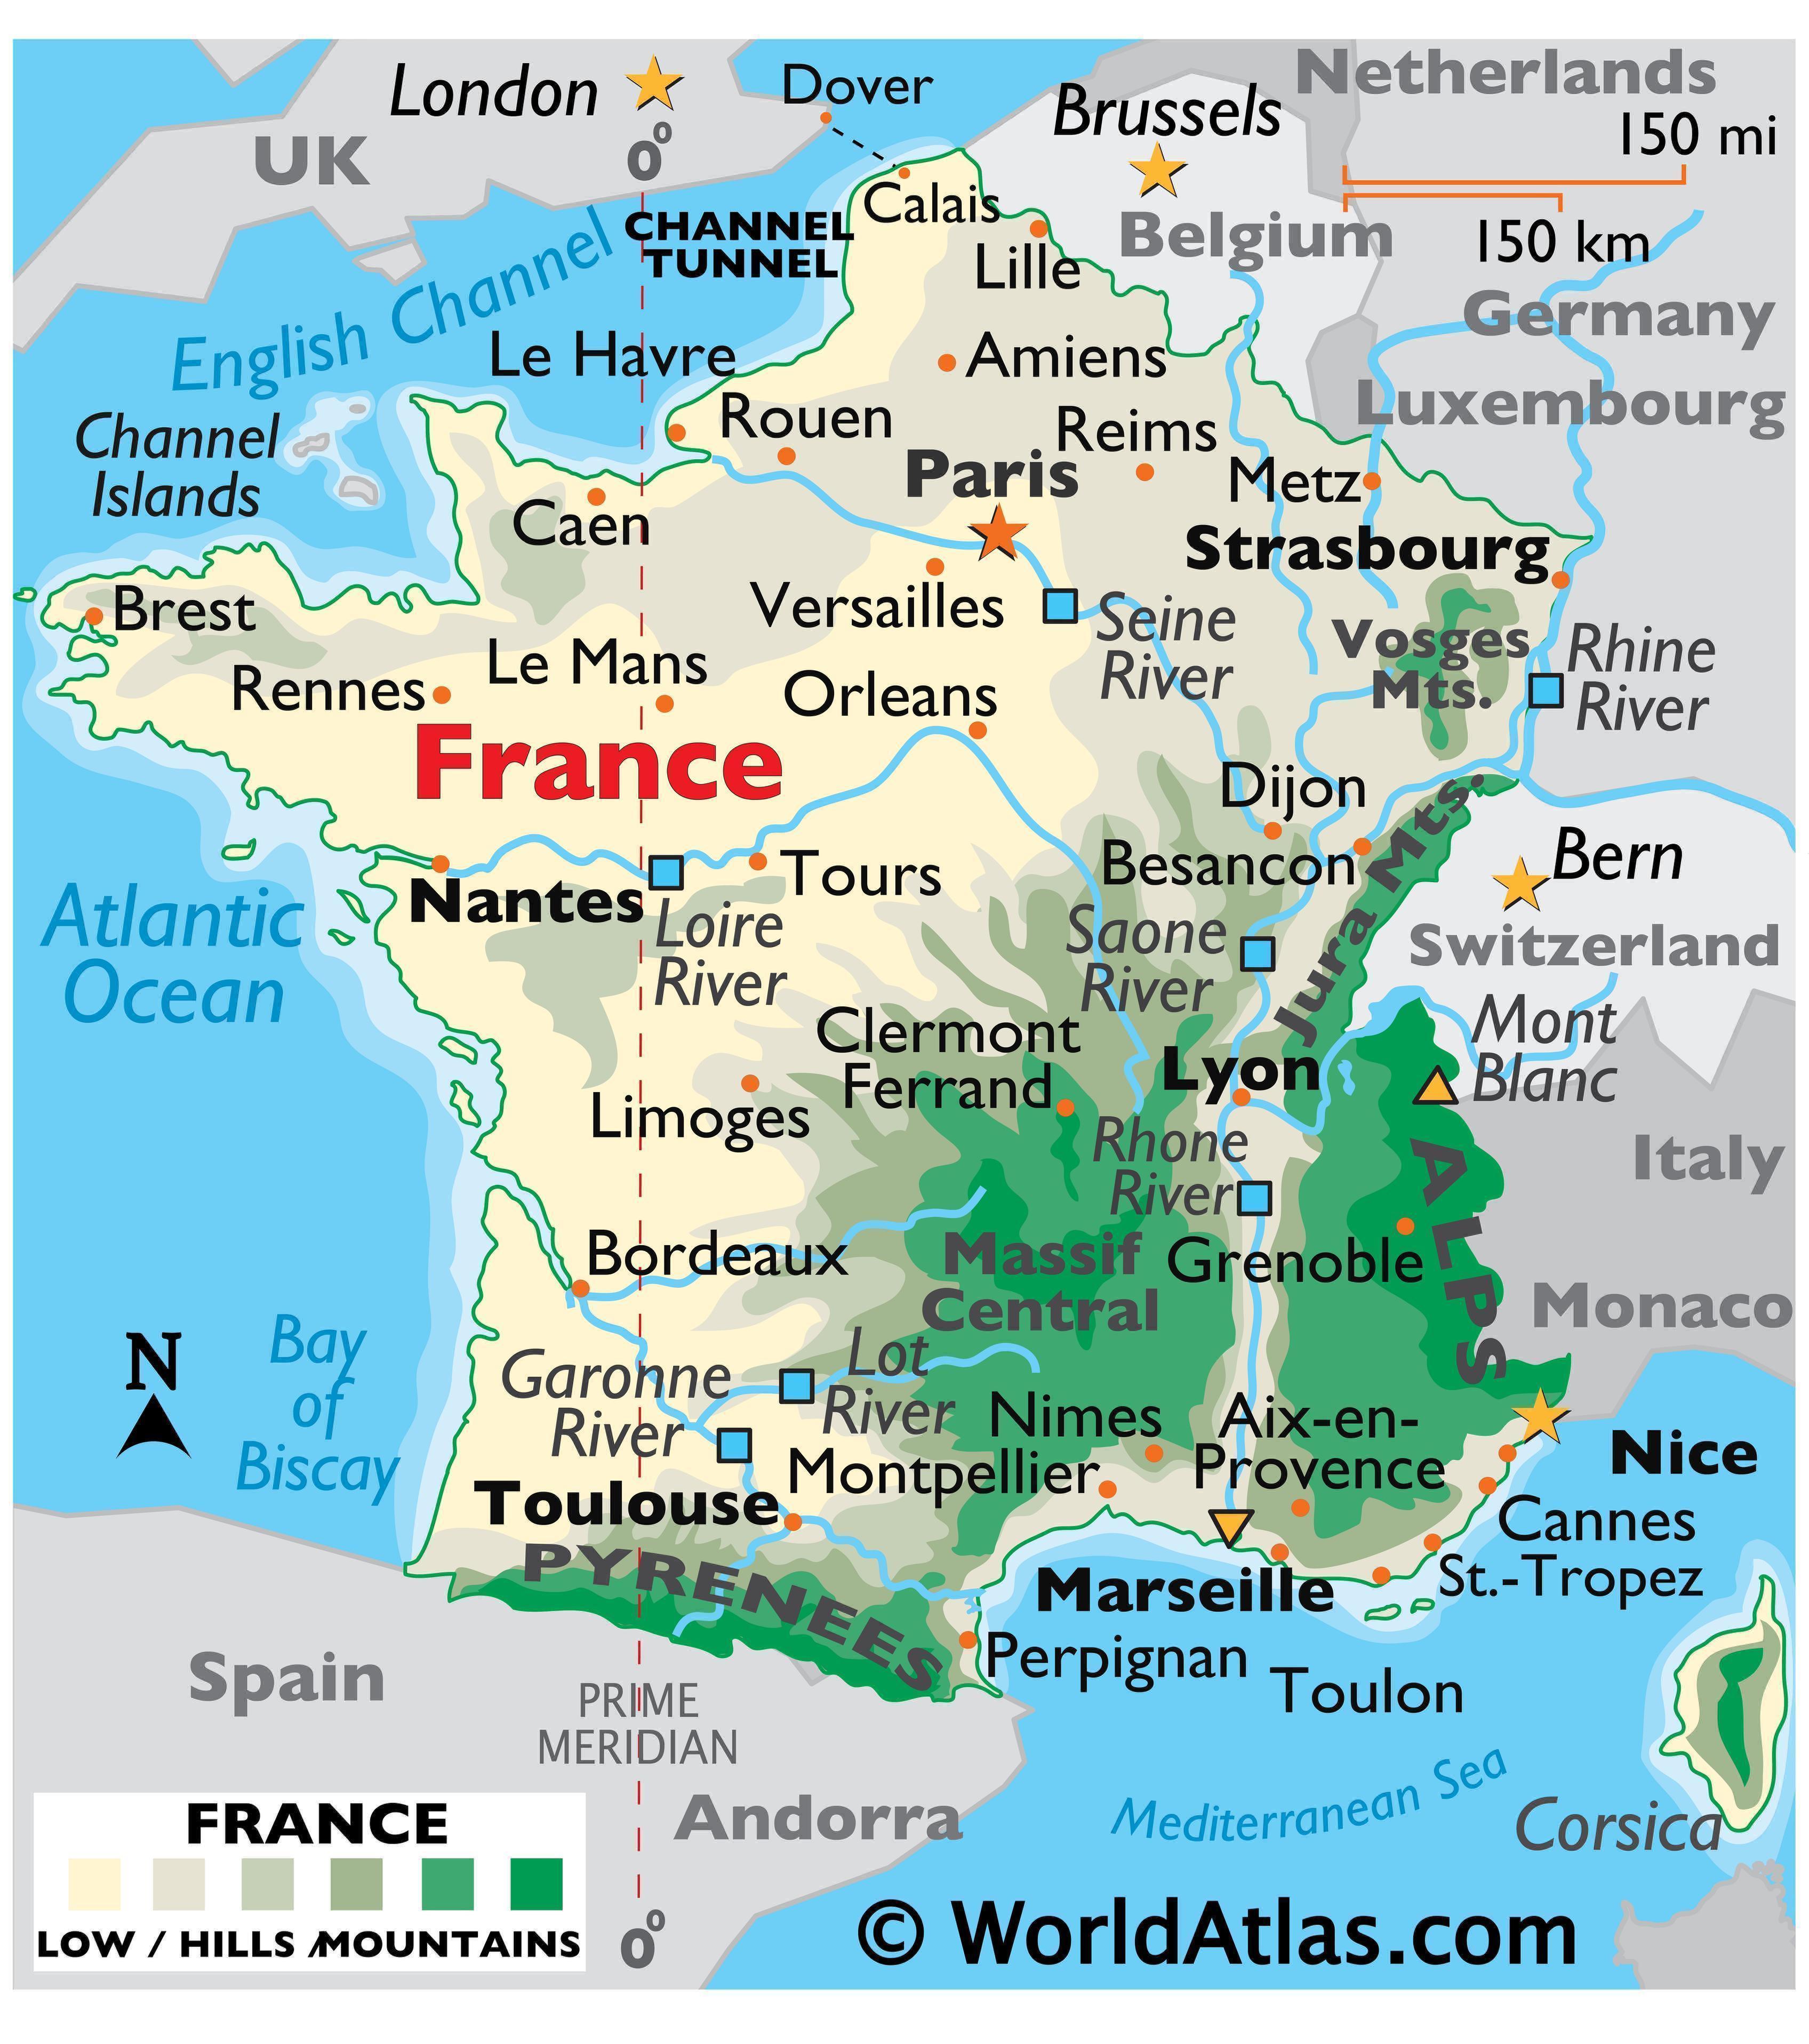 PIS VADODARA STD 9: Map work of French Revolution